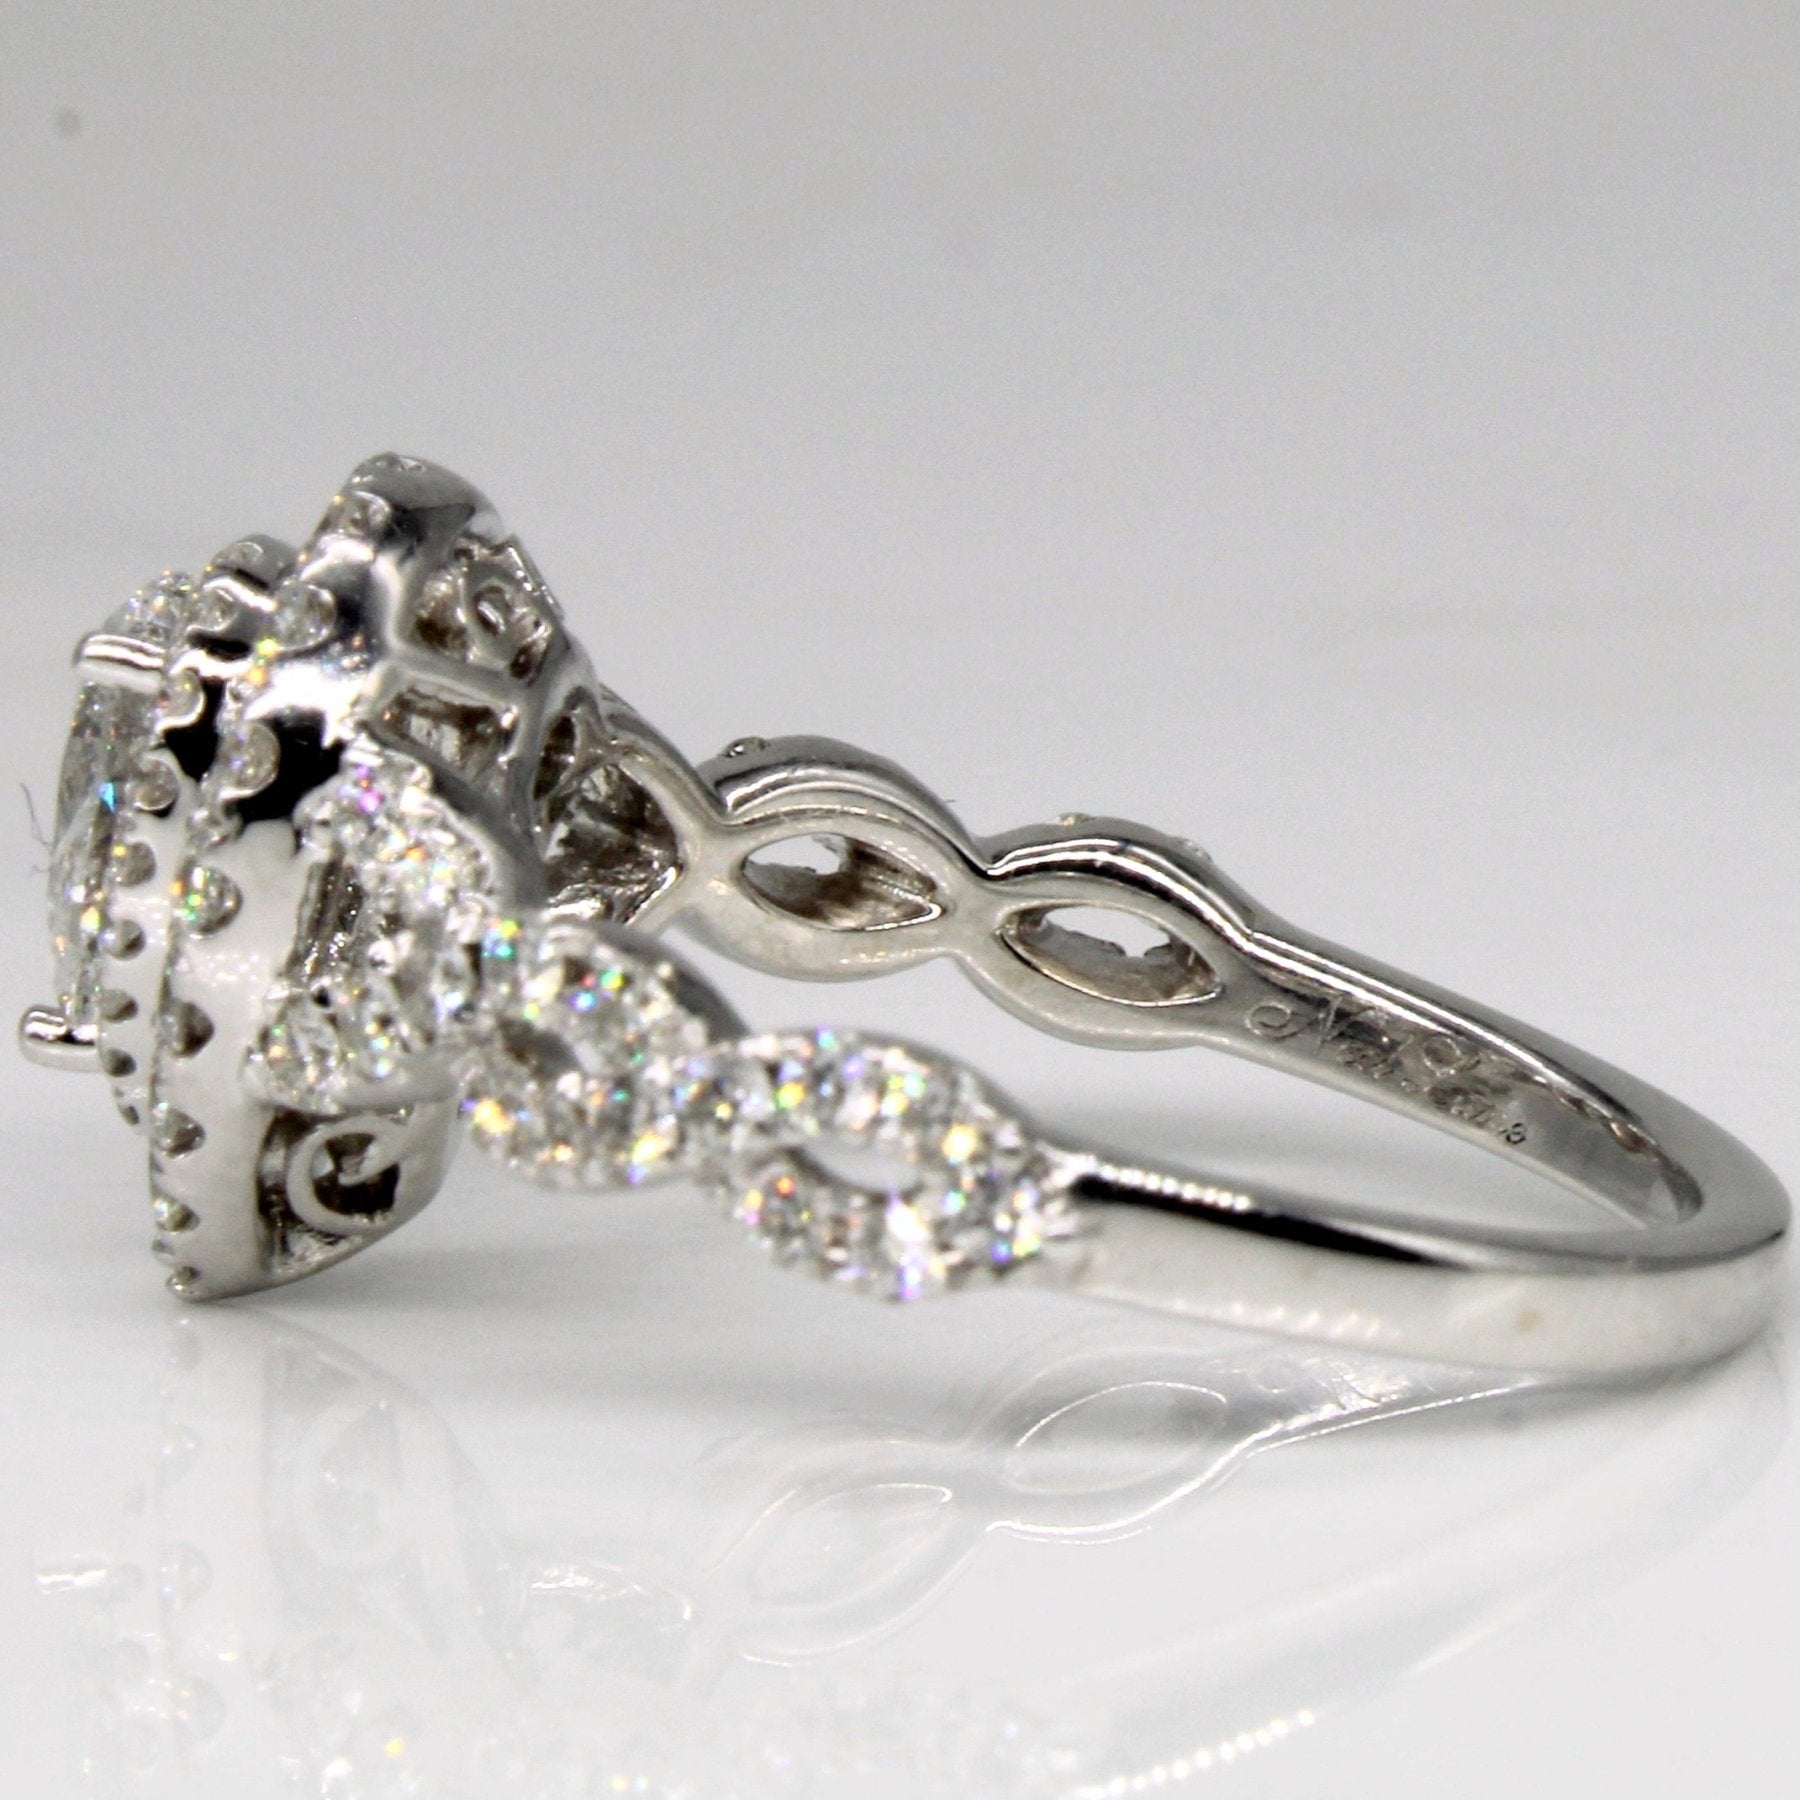 'Neil Lane' Pear Cut Diamond Engagement Ring | 1.20ctw F SI2 | SZ 6.5 | - 100 Ways